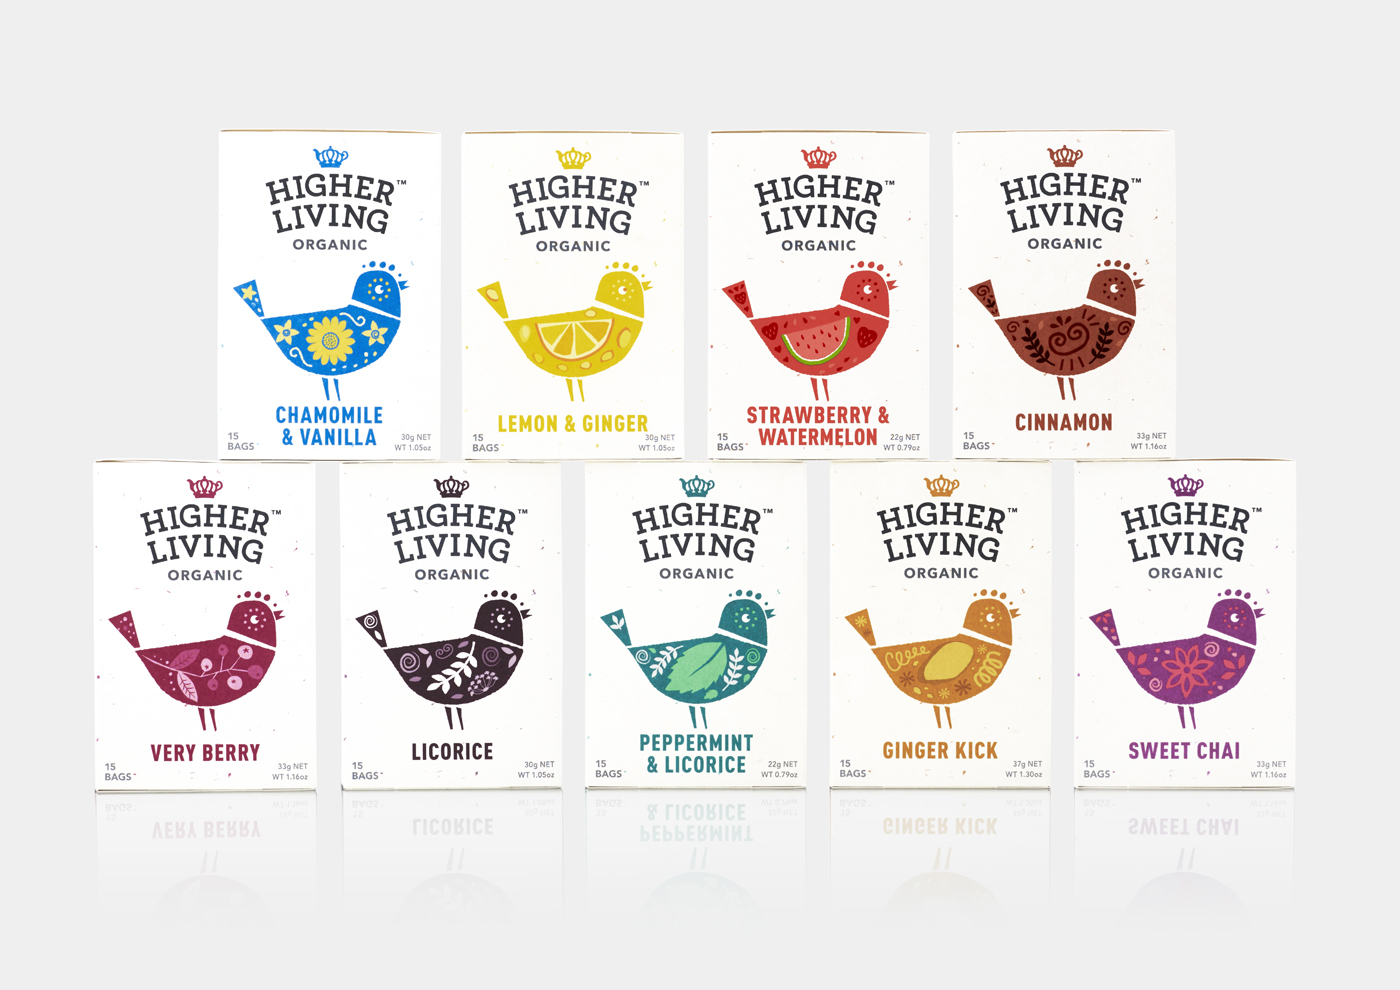 Branding and packaging for organic tea company Higher Living by B&B Studio, United Kingdom